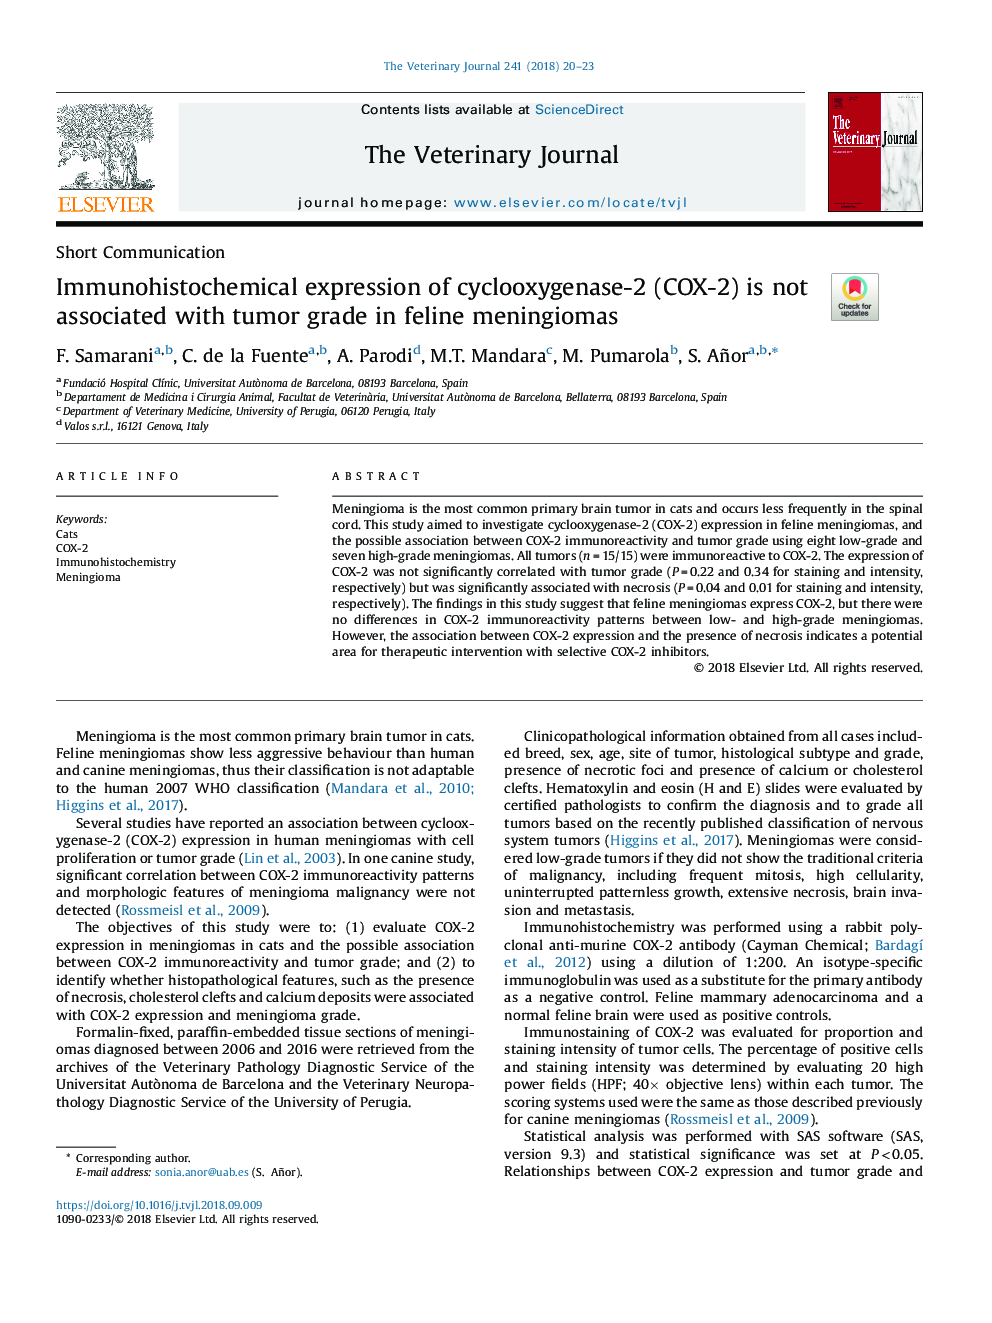 Immunohistochemical expression of cyclooxygenase-2 (COX-2) is not associated with tumor grade in feline meningiomas